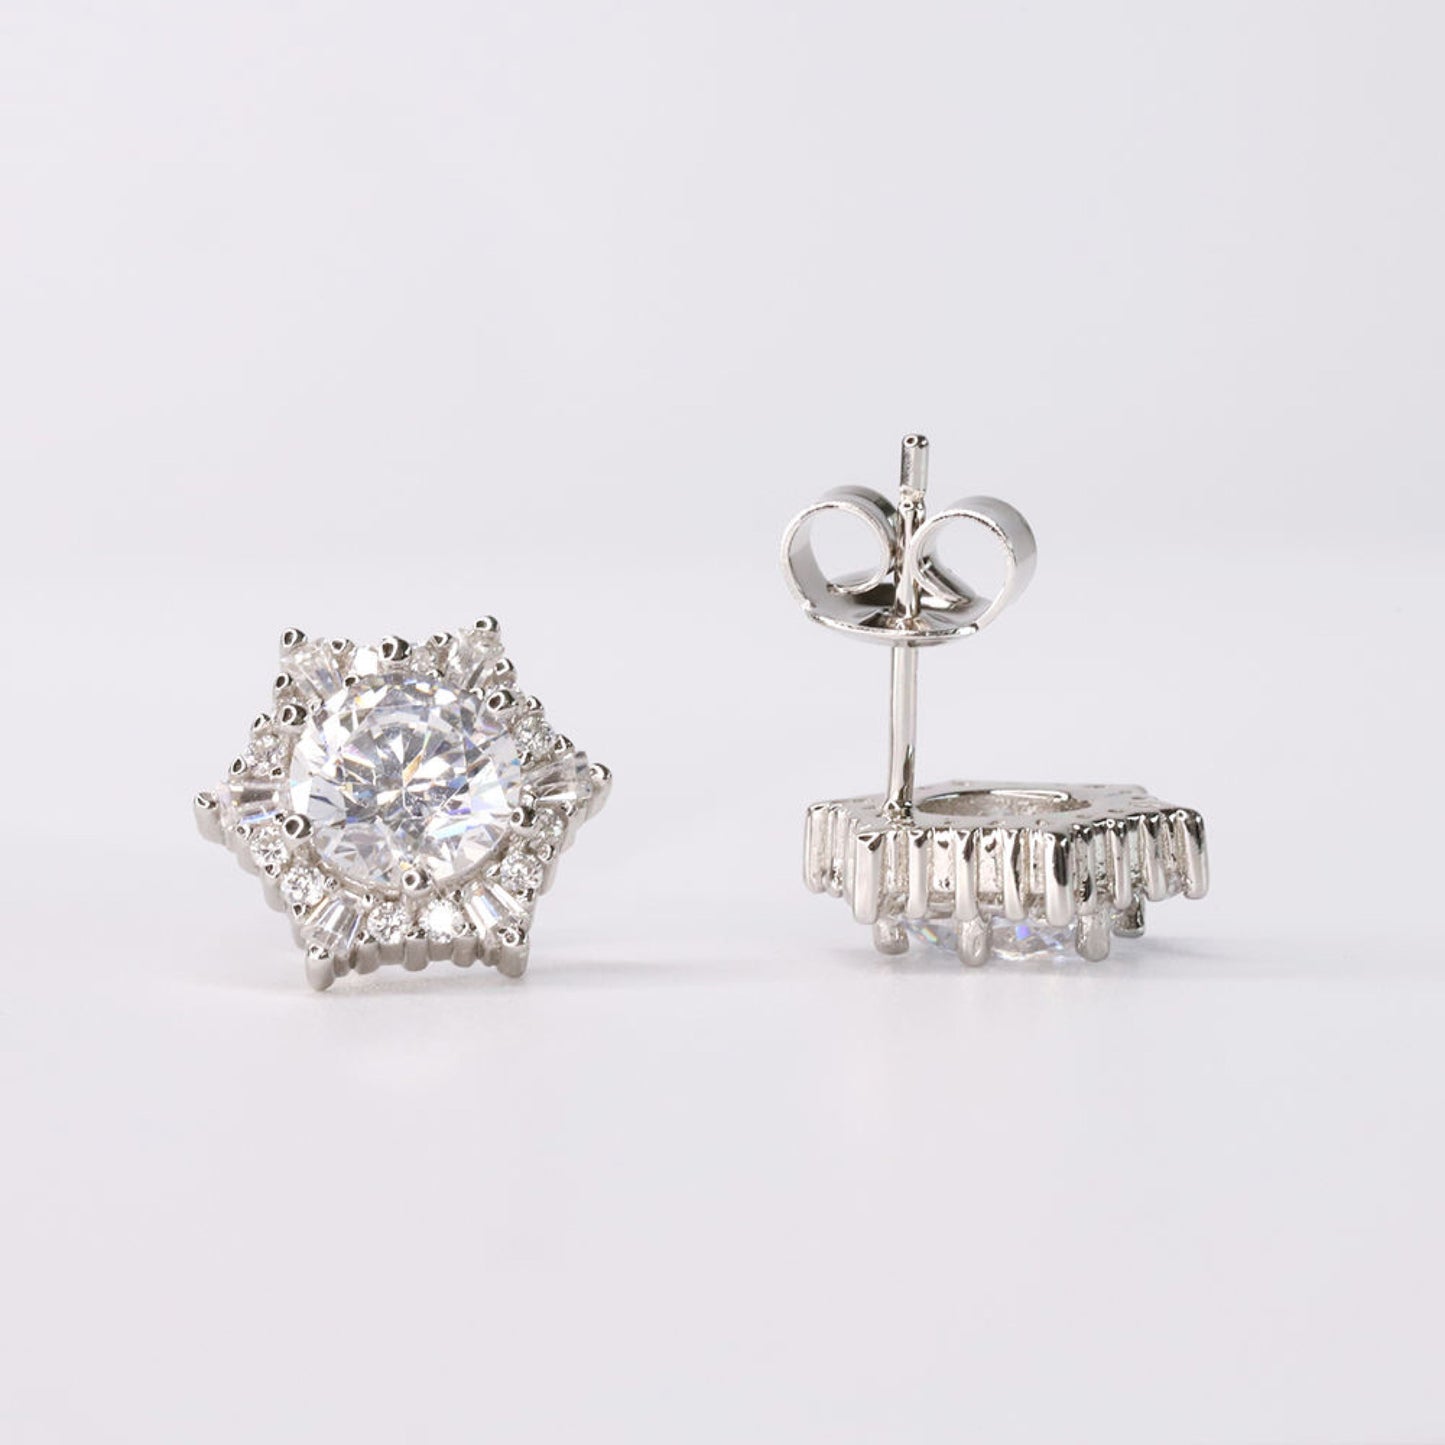 Snowflake Stud Earrings- Rhodium plated